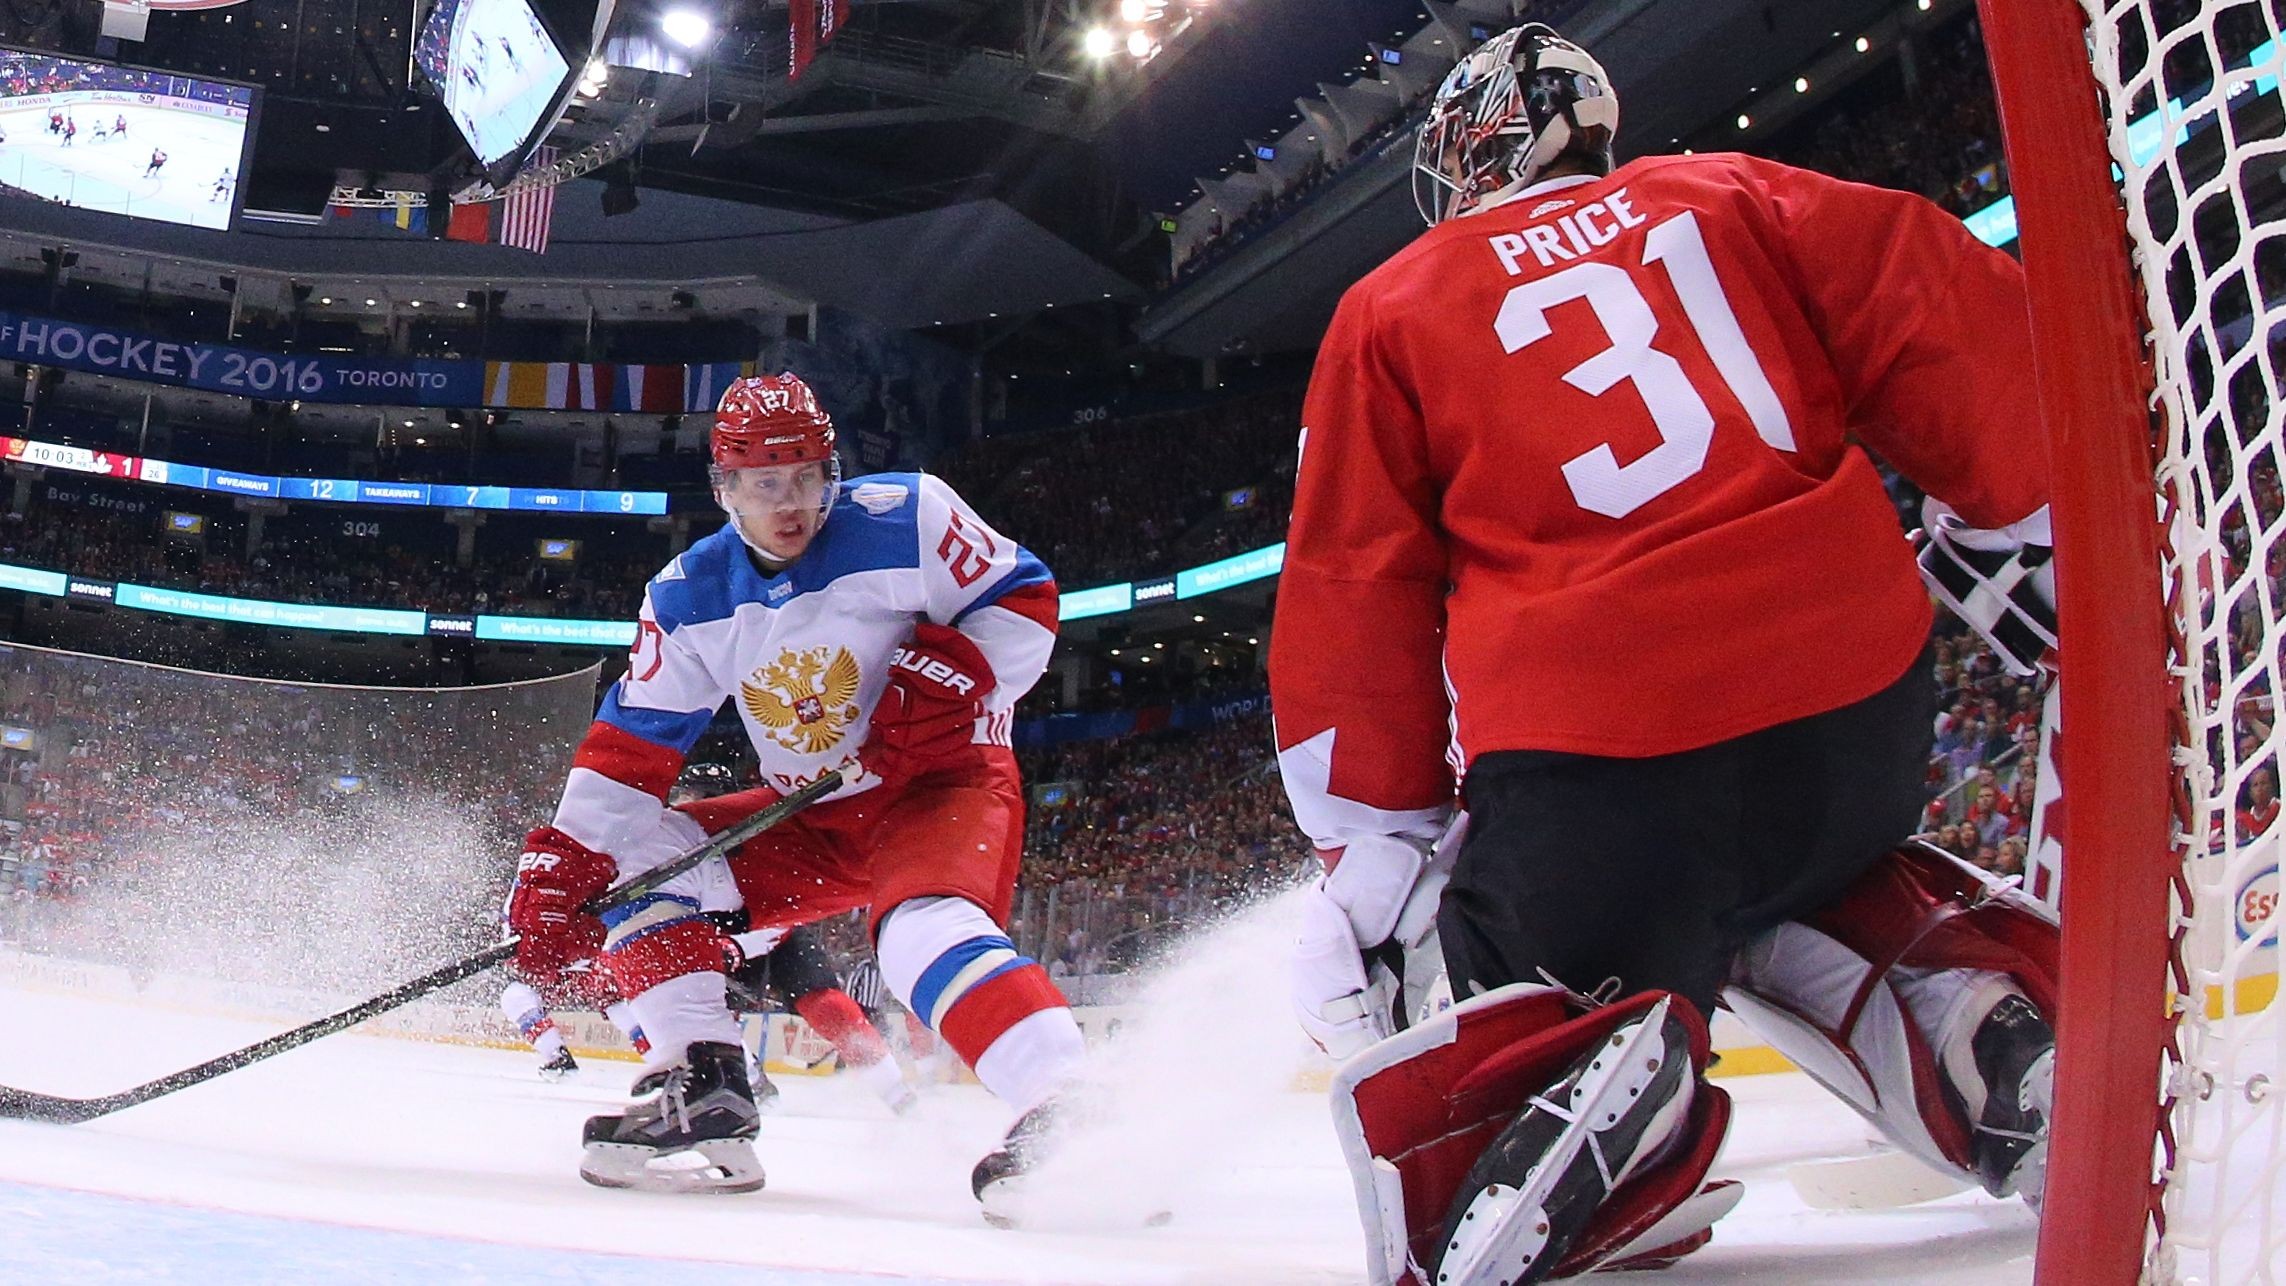 Канада россия игры. Хоккей Россия Канада. Россия против Канады хоккей. Хоккей сборная Канады. Кубок первого канала (хоккей).